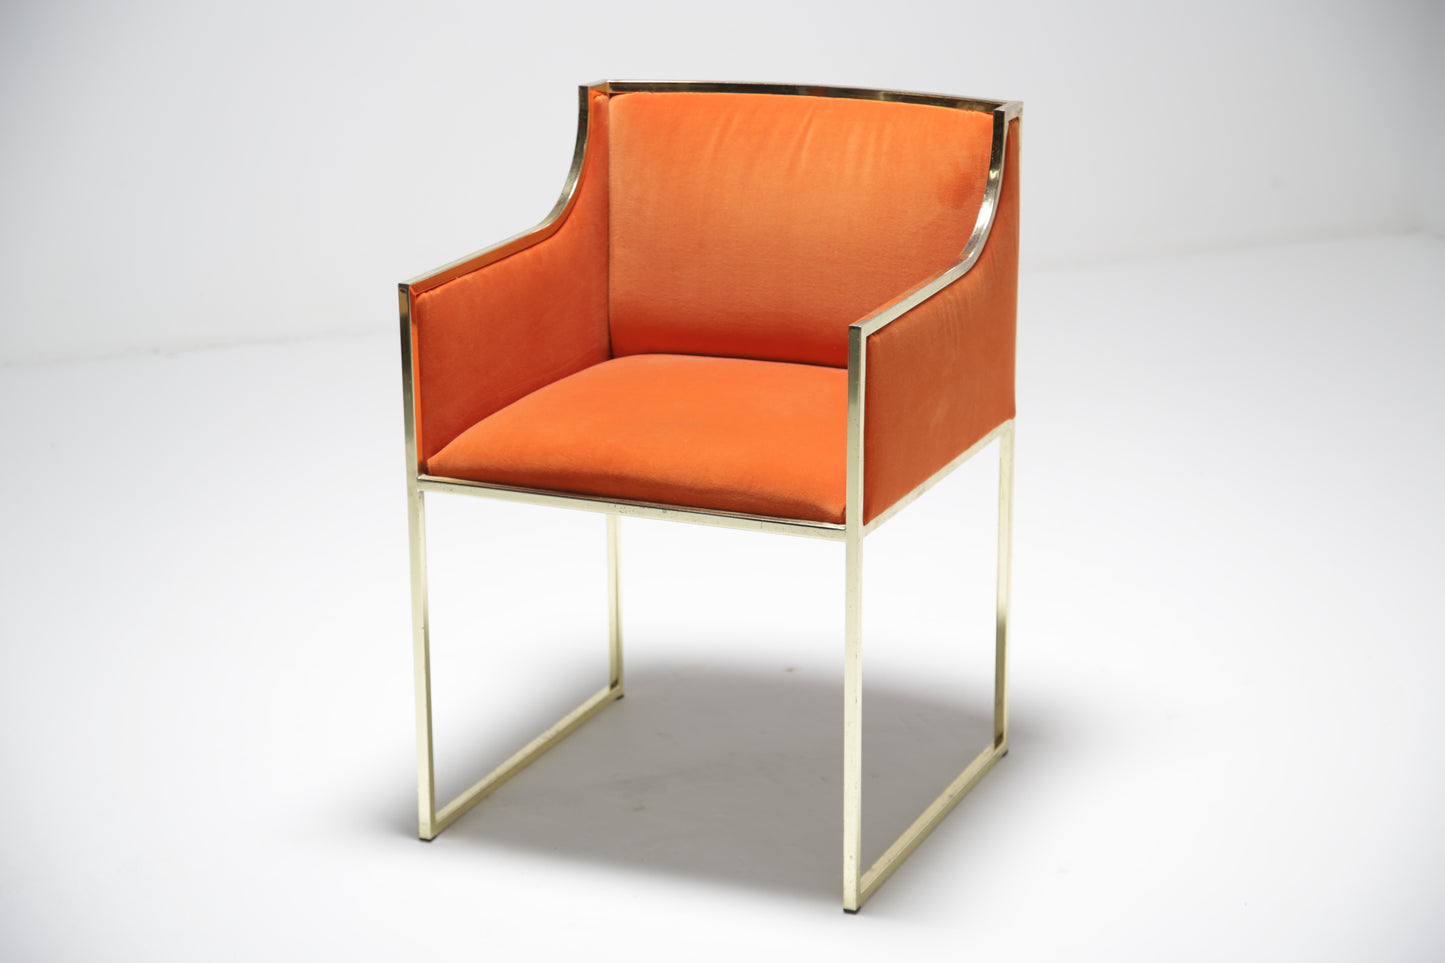 Brass chair by Renato Zevi